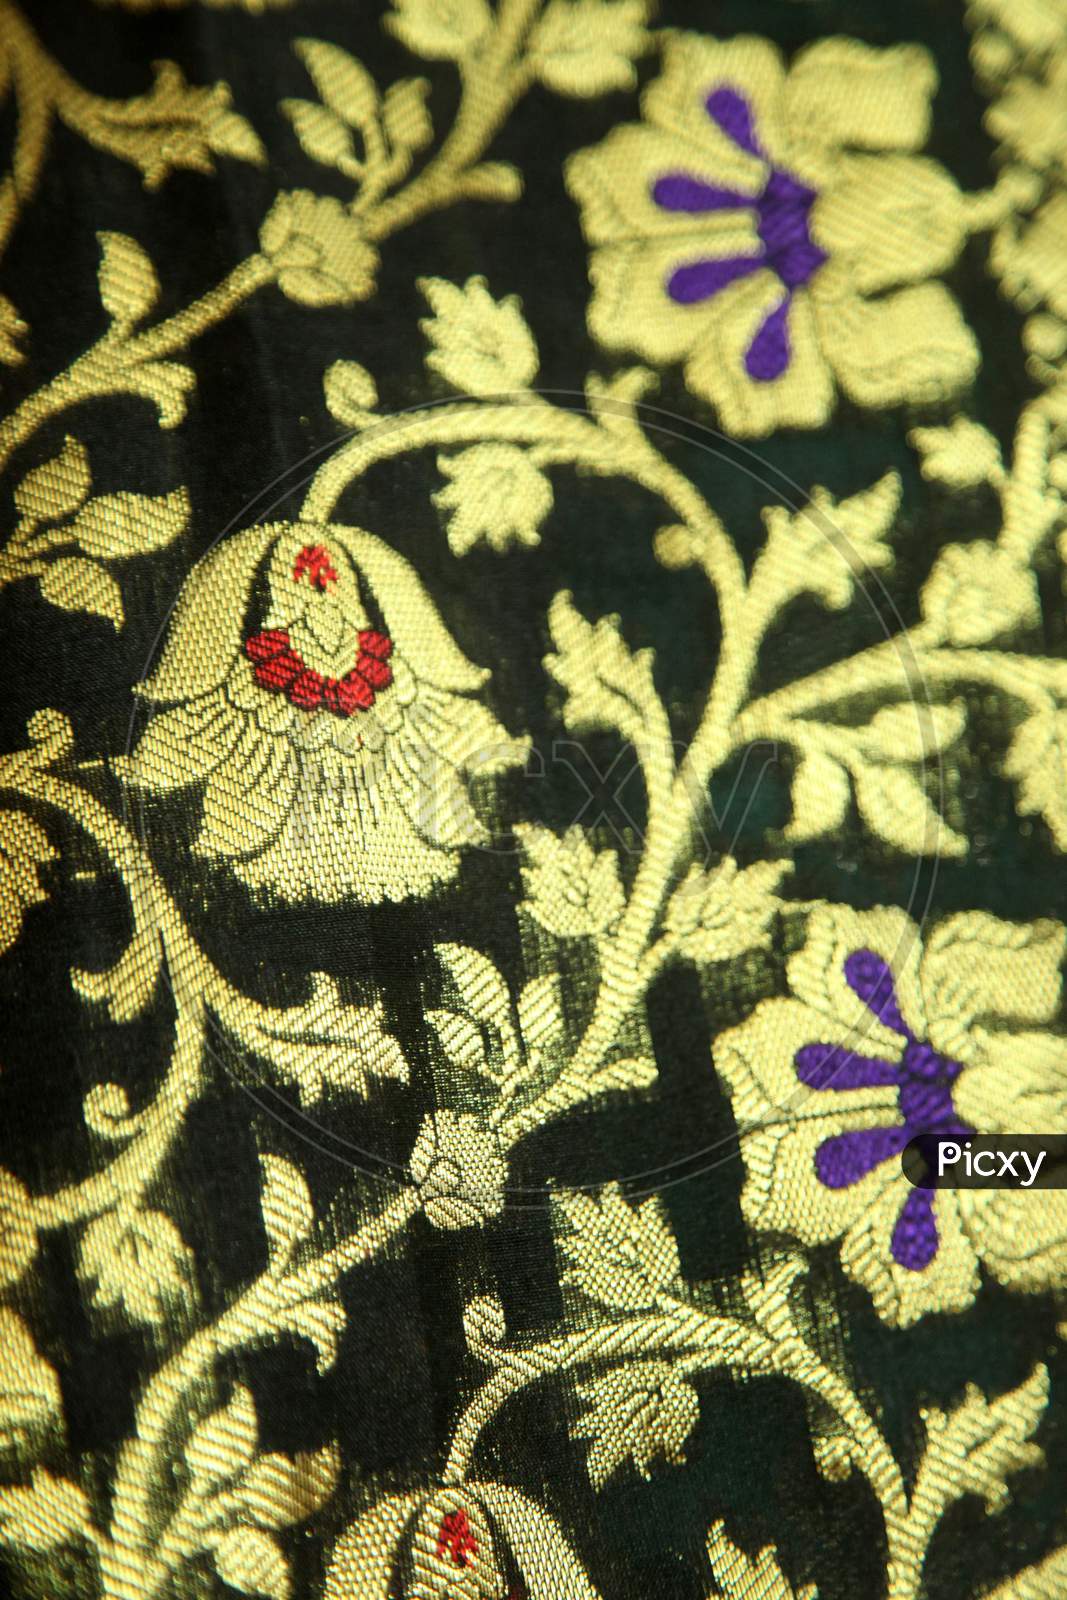 Close up shot of Design on a Cloth